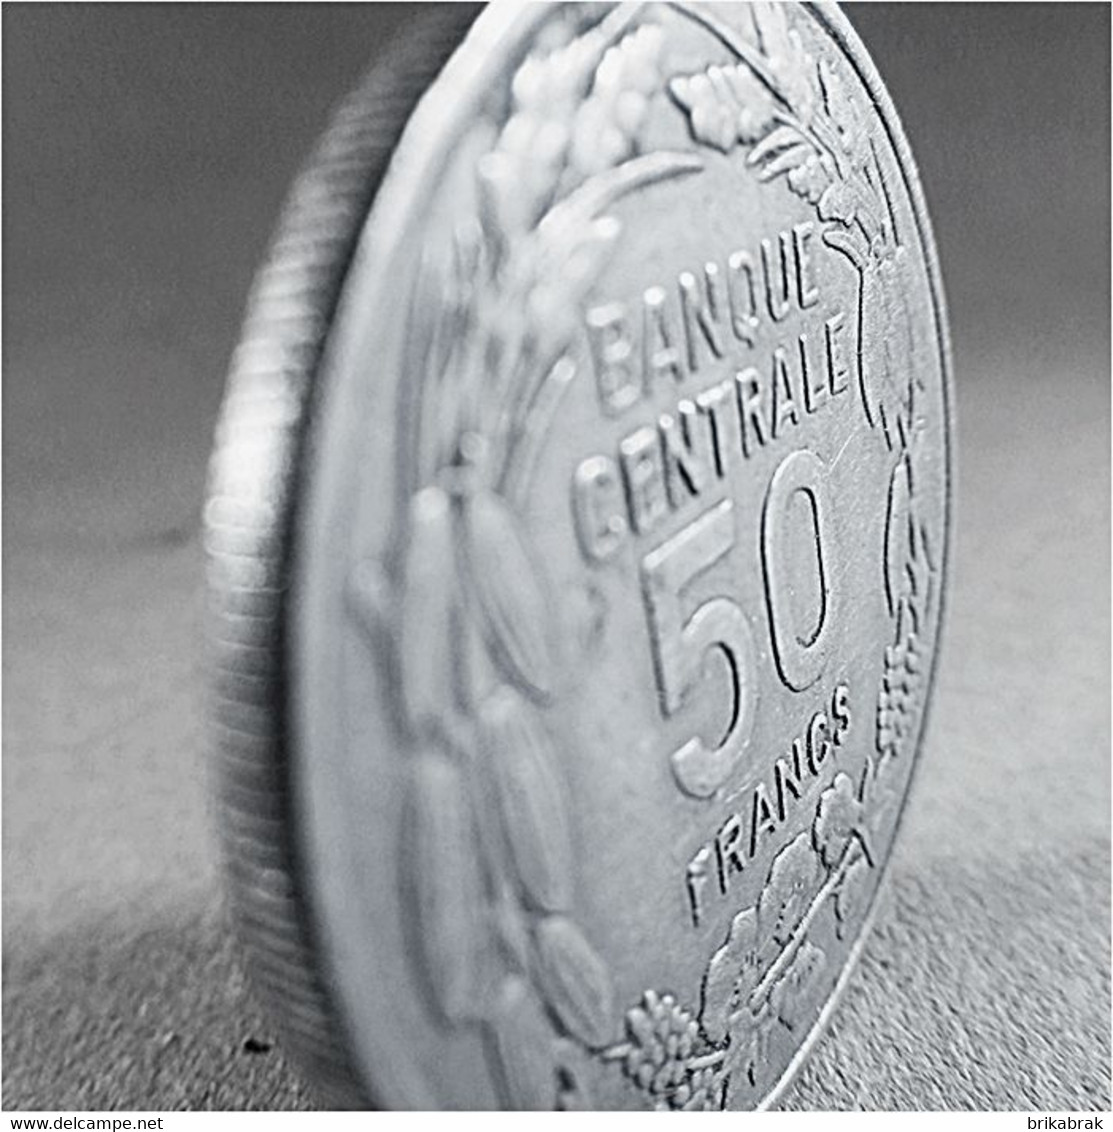 PIECE 50 FRANCS CAMEROUN 1960 - Monnaie Afrique Bazor - Kamerun